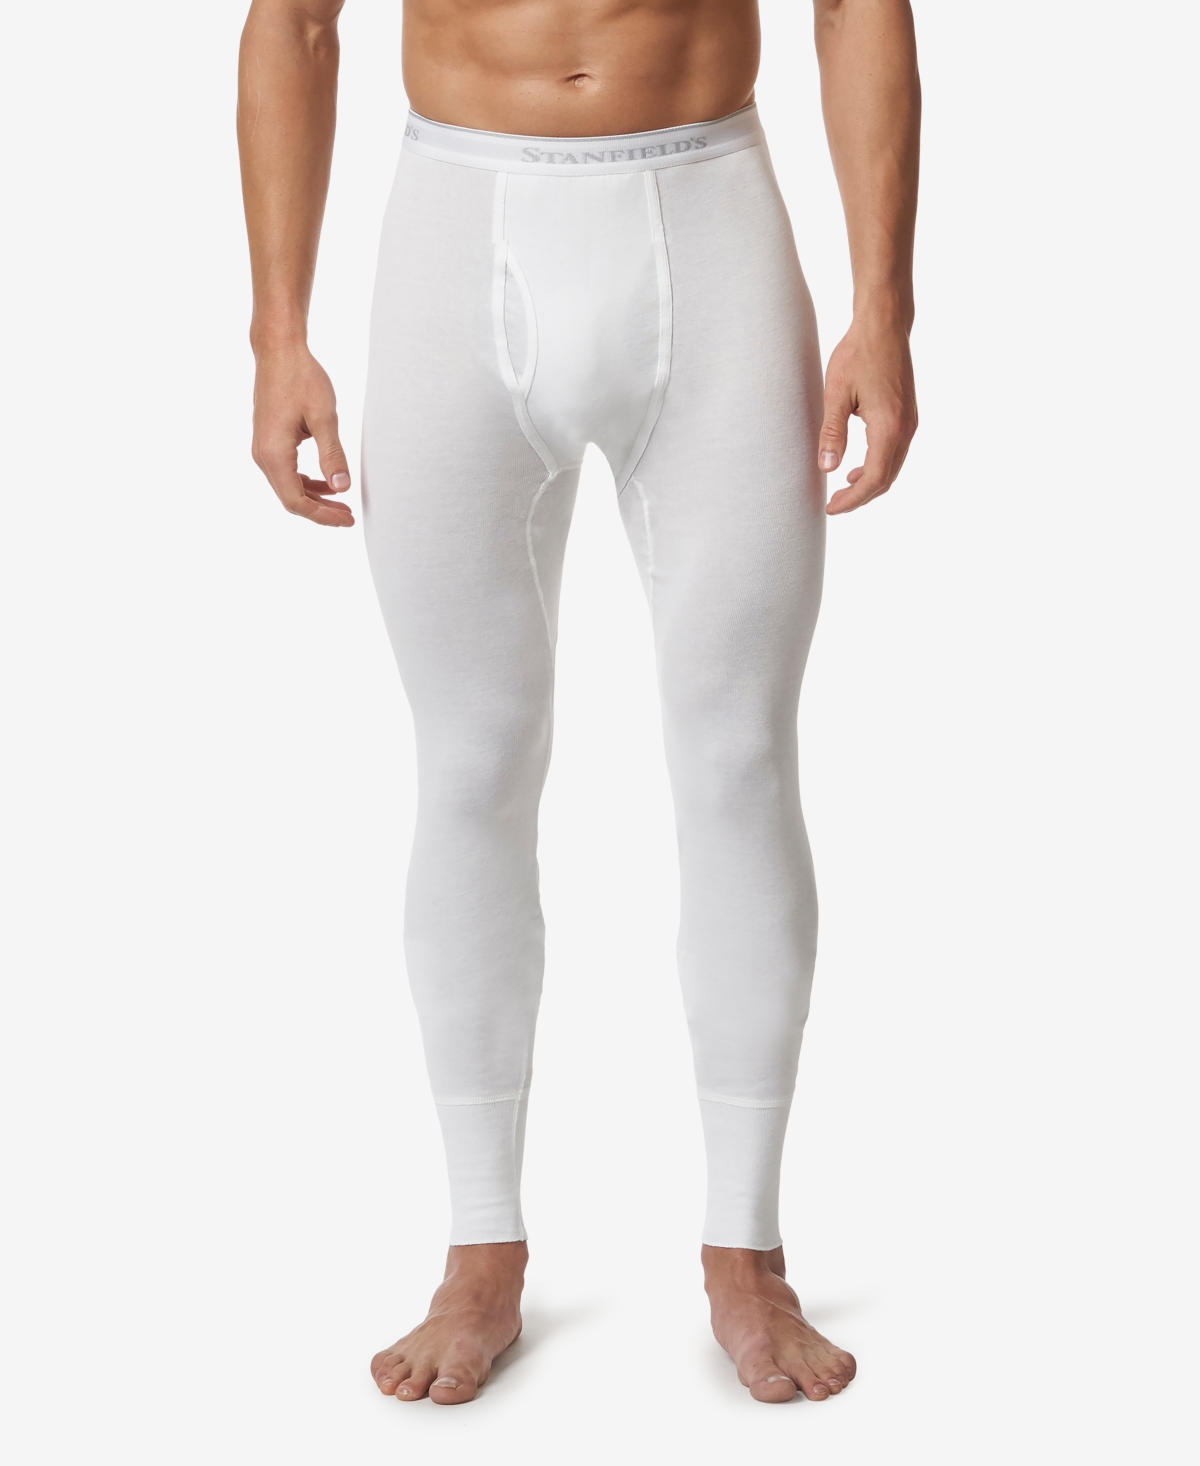 Men's Premium Cotton Rib Thermal Long Underwear - White